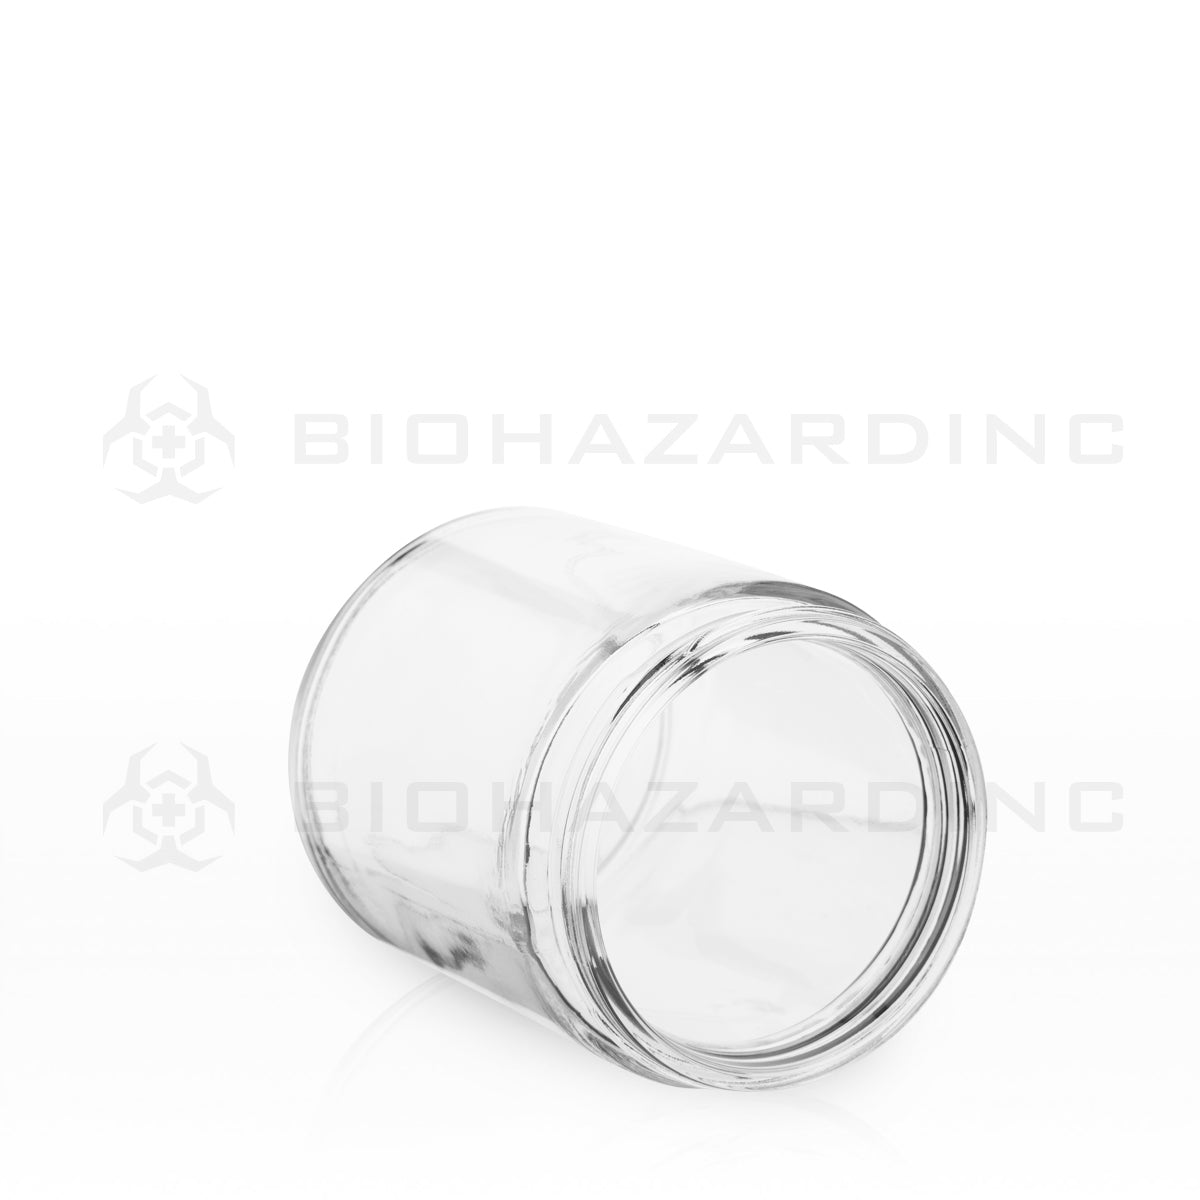 Glass Jar | Straight Sided Glass Jars - Clear | 70mm - 8oz - 24 Count Glass Jar Biohazard Inc   